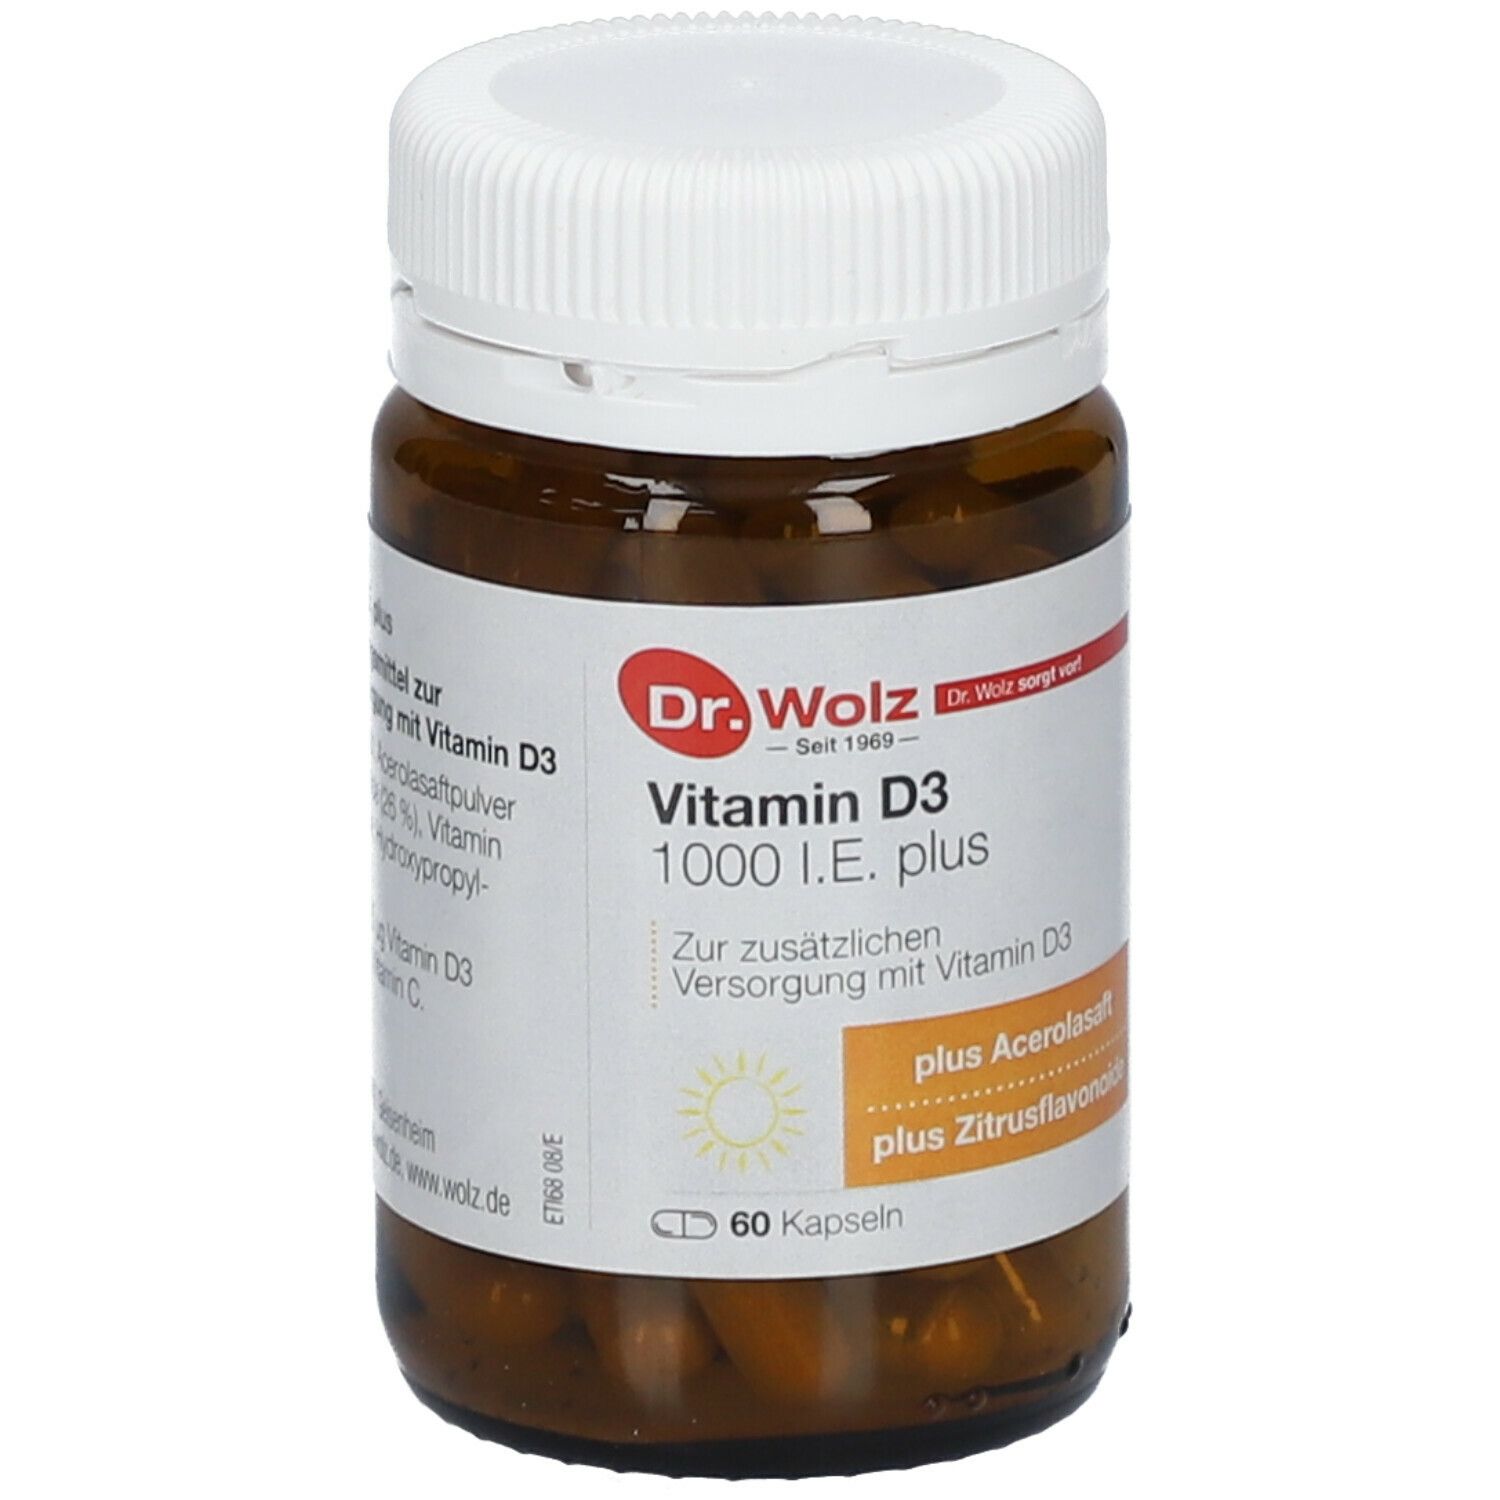 Vitamin D3 1000 I.E. plus